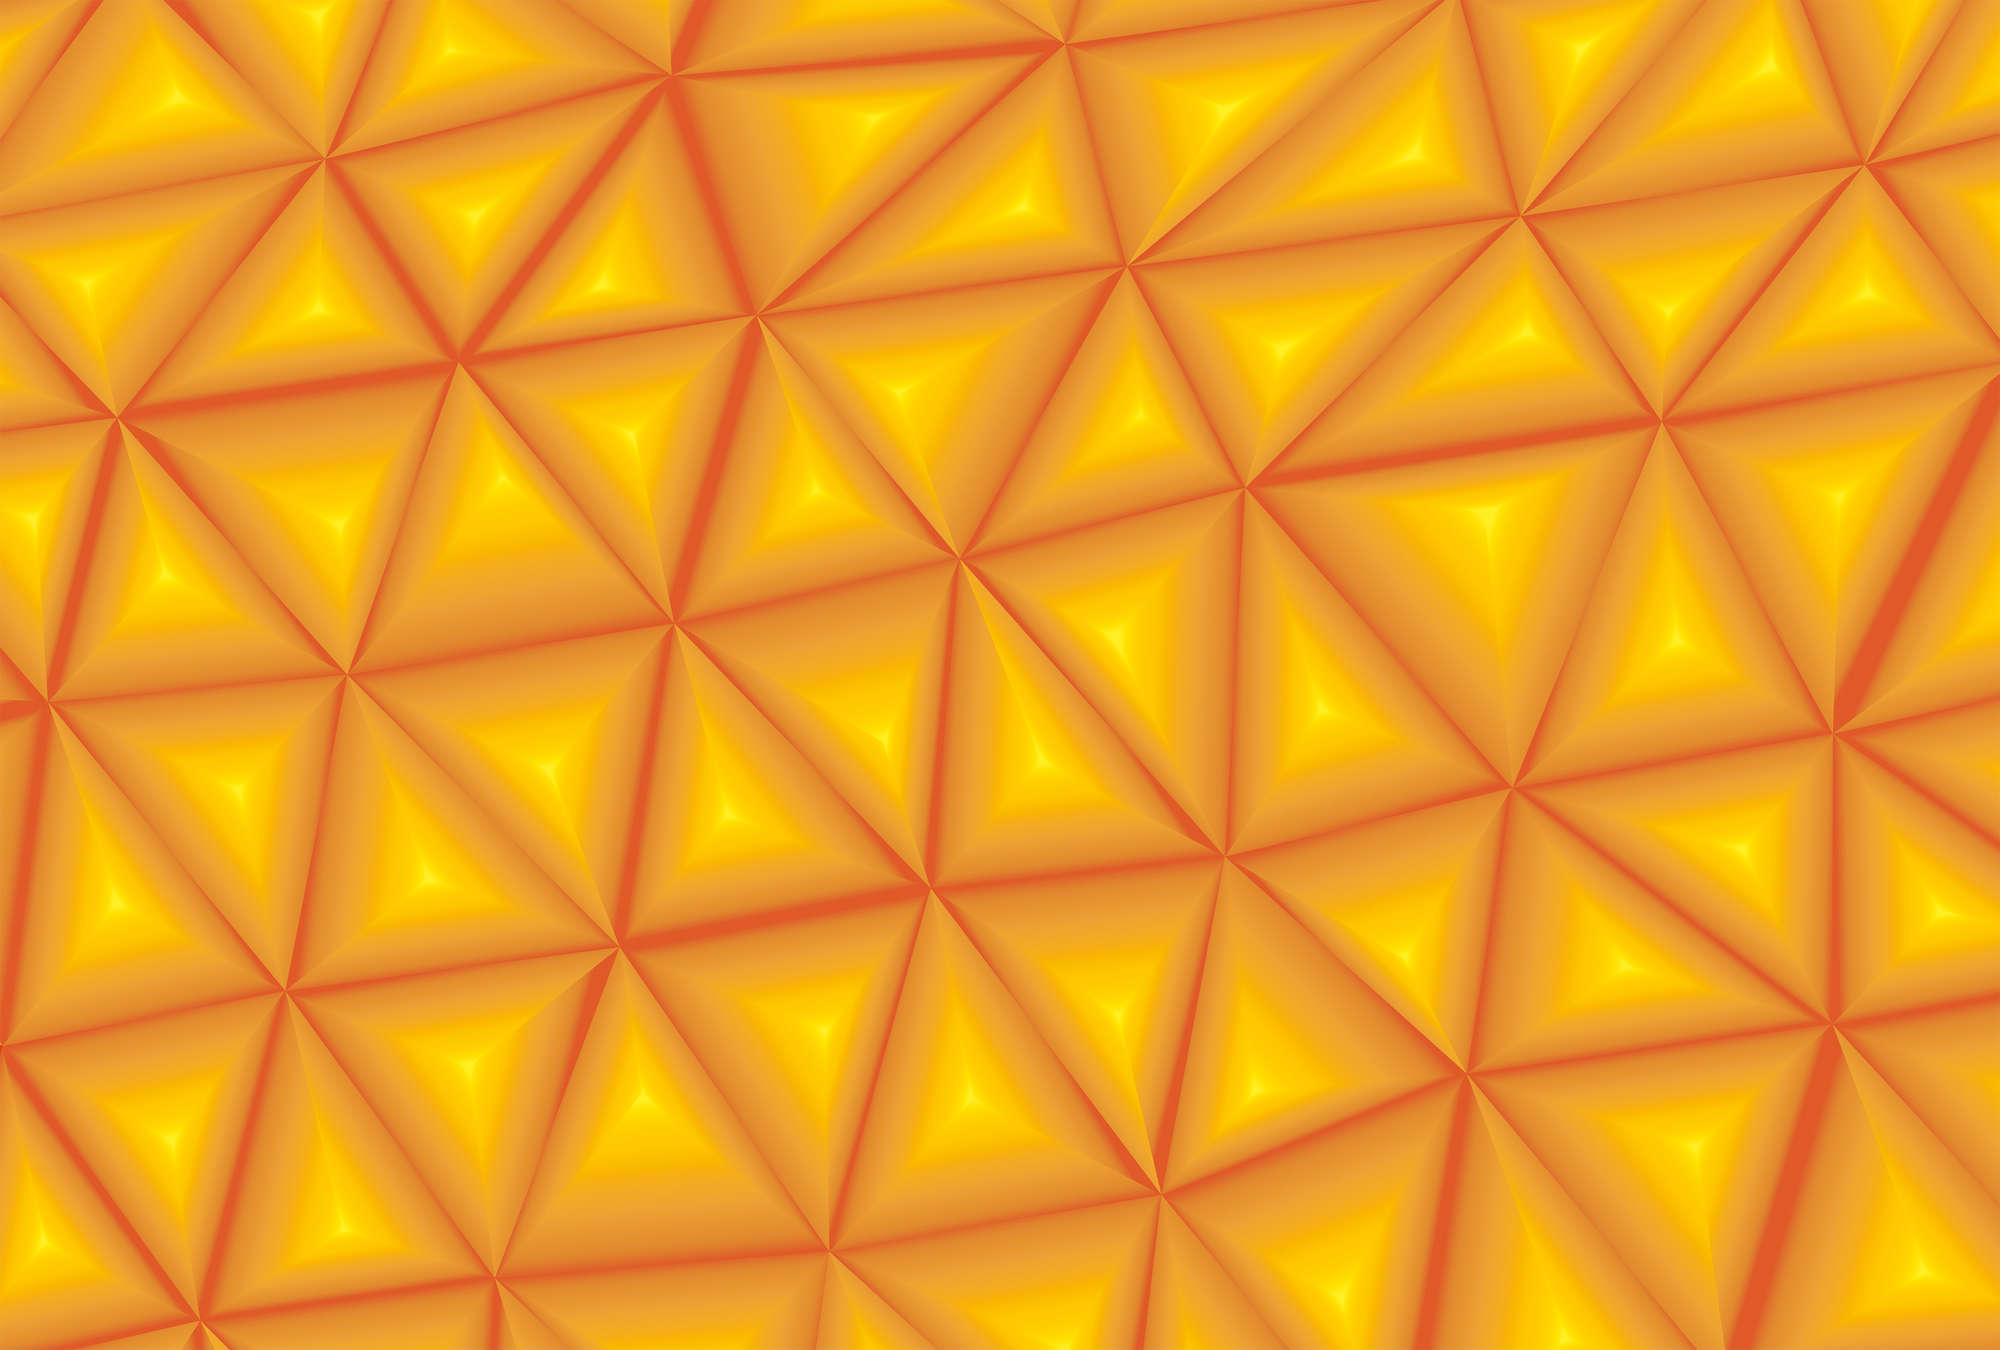             Fototopo 3D Naranja con facetas triangulares
        